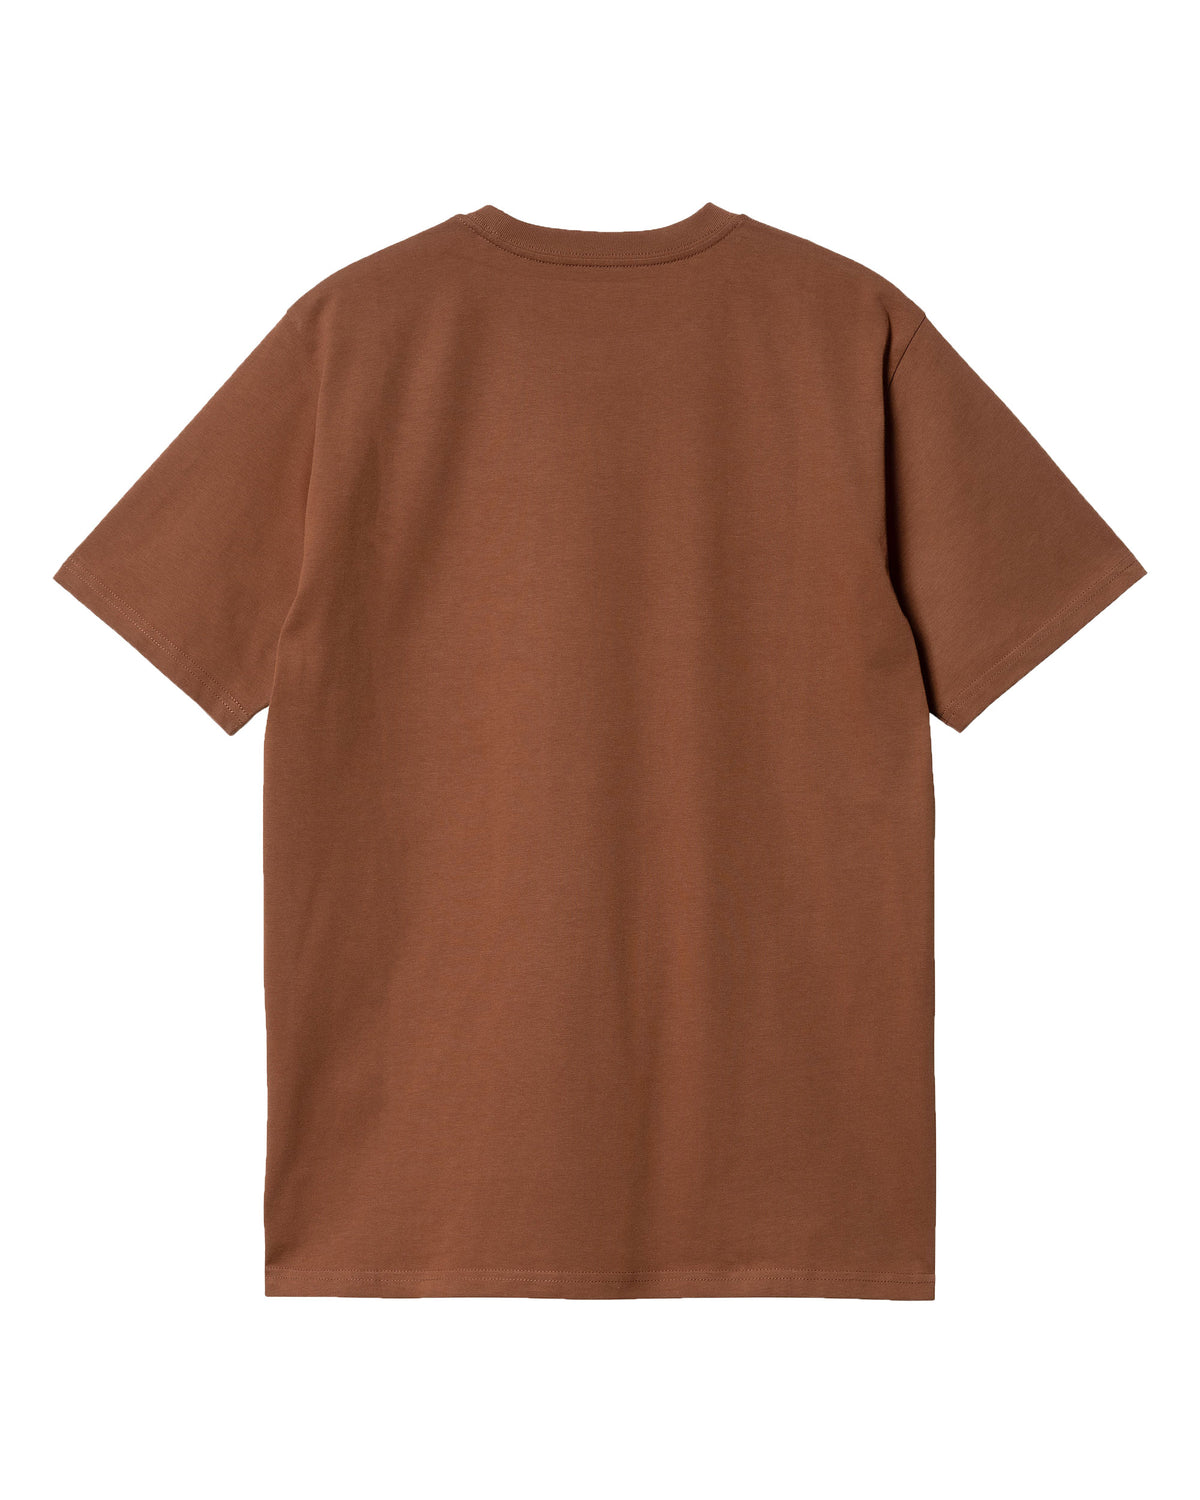 Carhartt Wip Pocket T-Shirt Beaver